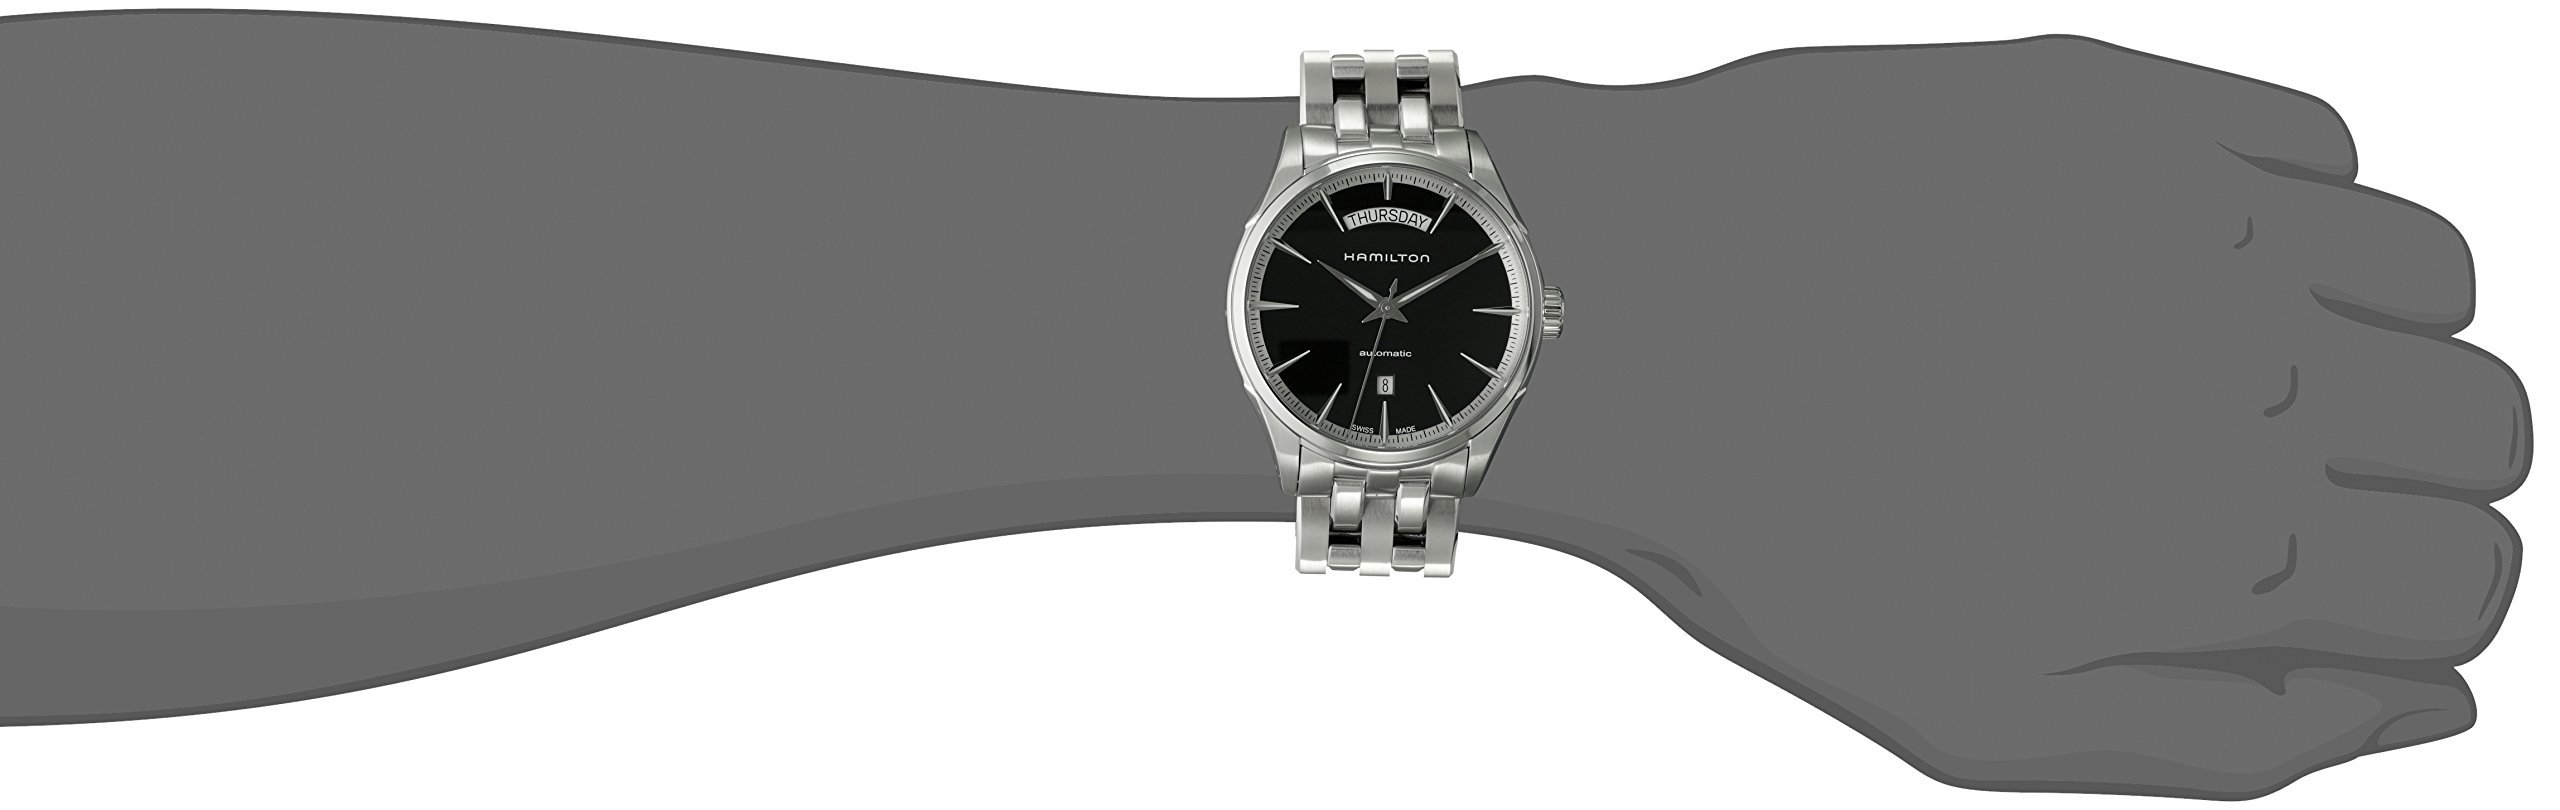 Hamilton Men's H42565131 Jazz master Analog Display Swiss Automatic Silver Watch